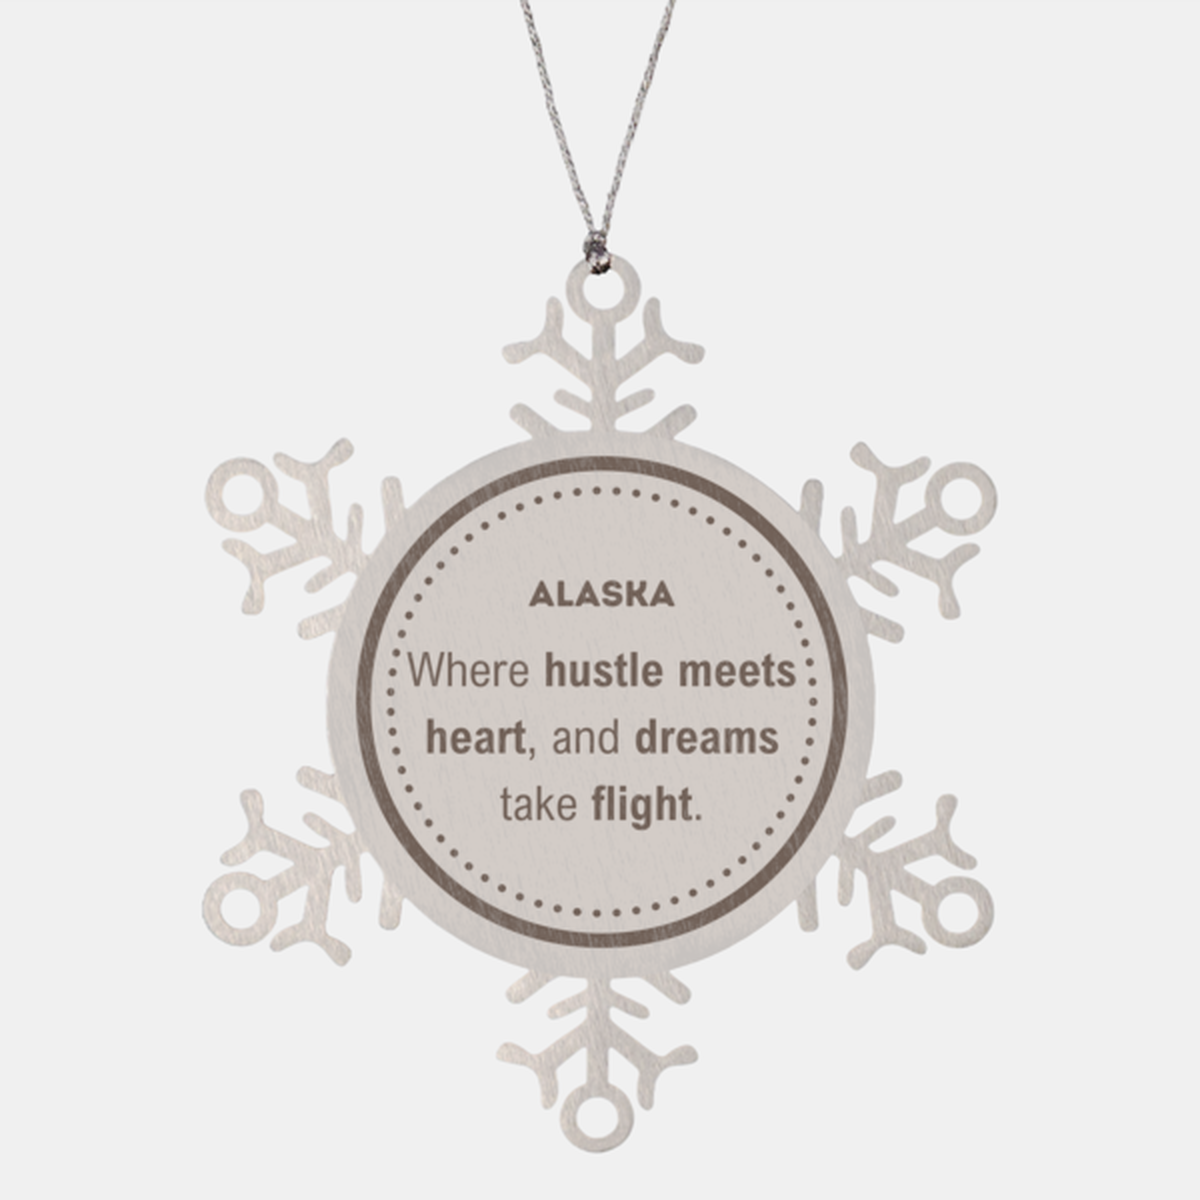 Alaska: Where hustle meets heart, and dreams take flight, Alaska Ornament Gifts, Proud Alaska Christmas Alaska Snowflake Ornament, Alaska State People, Men, Women, Friends